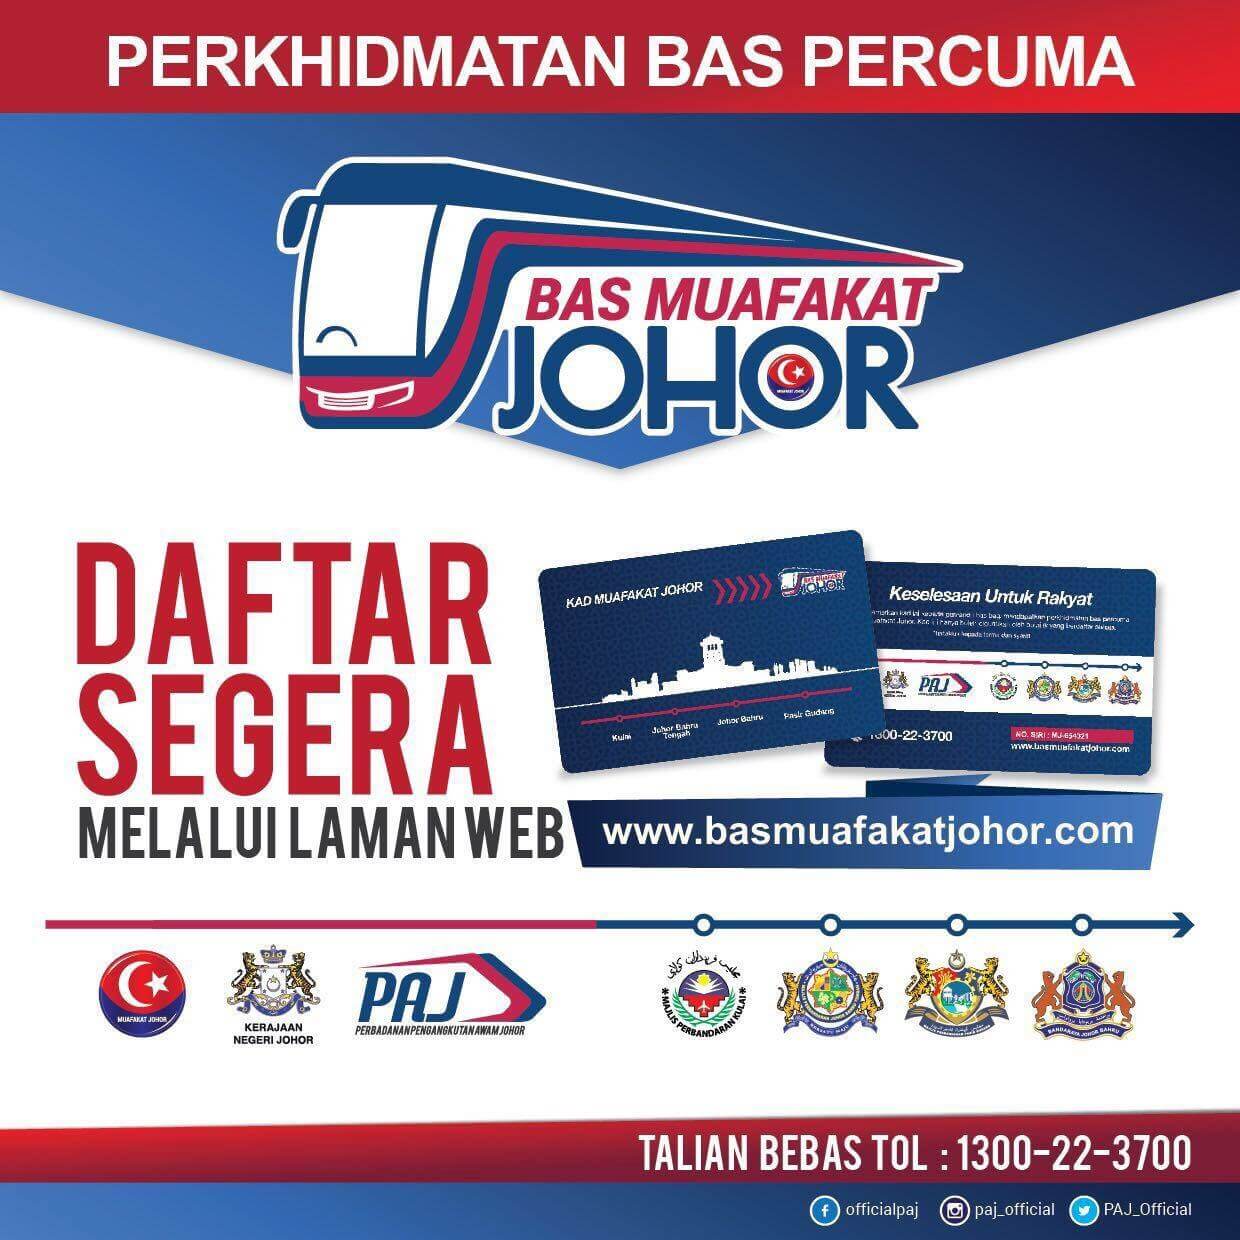 Bas Muafakat Johor